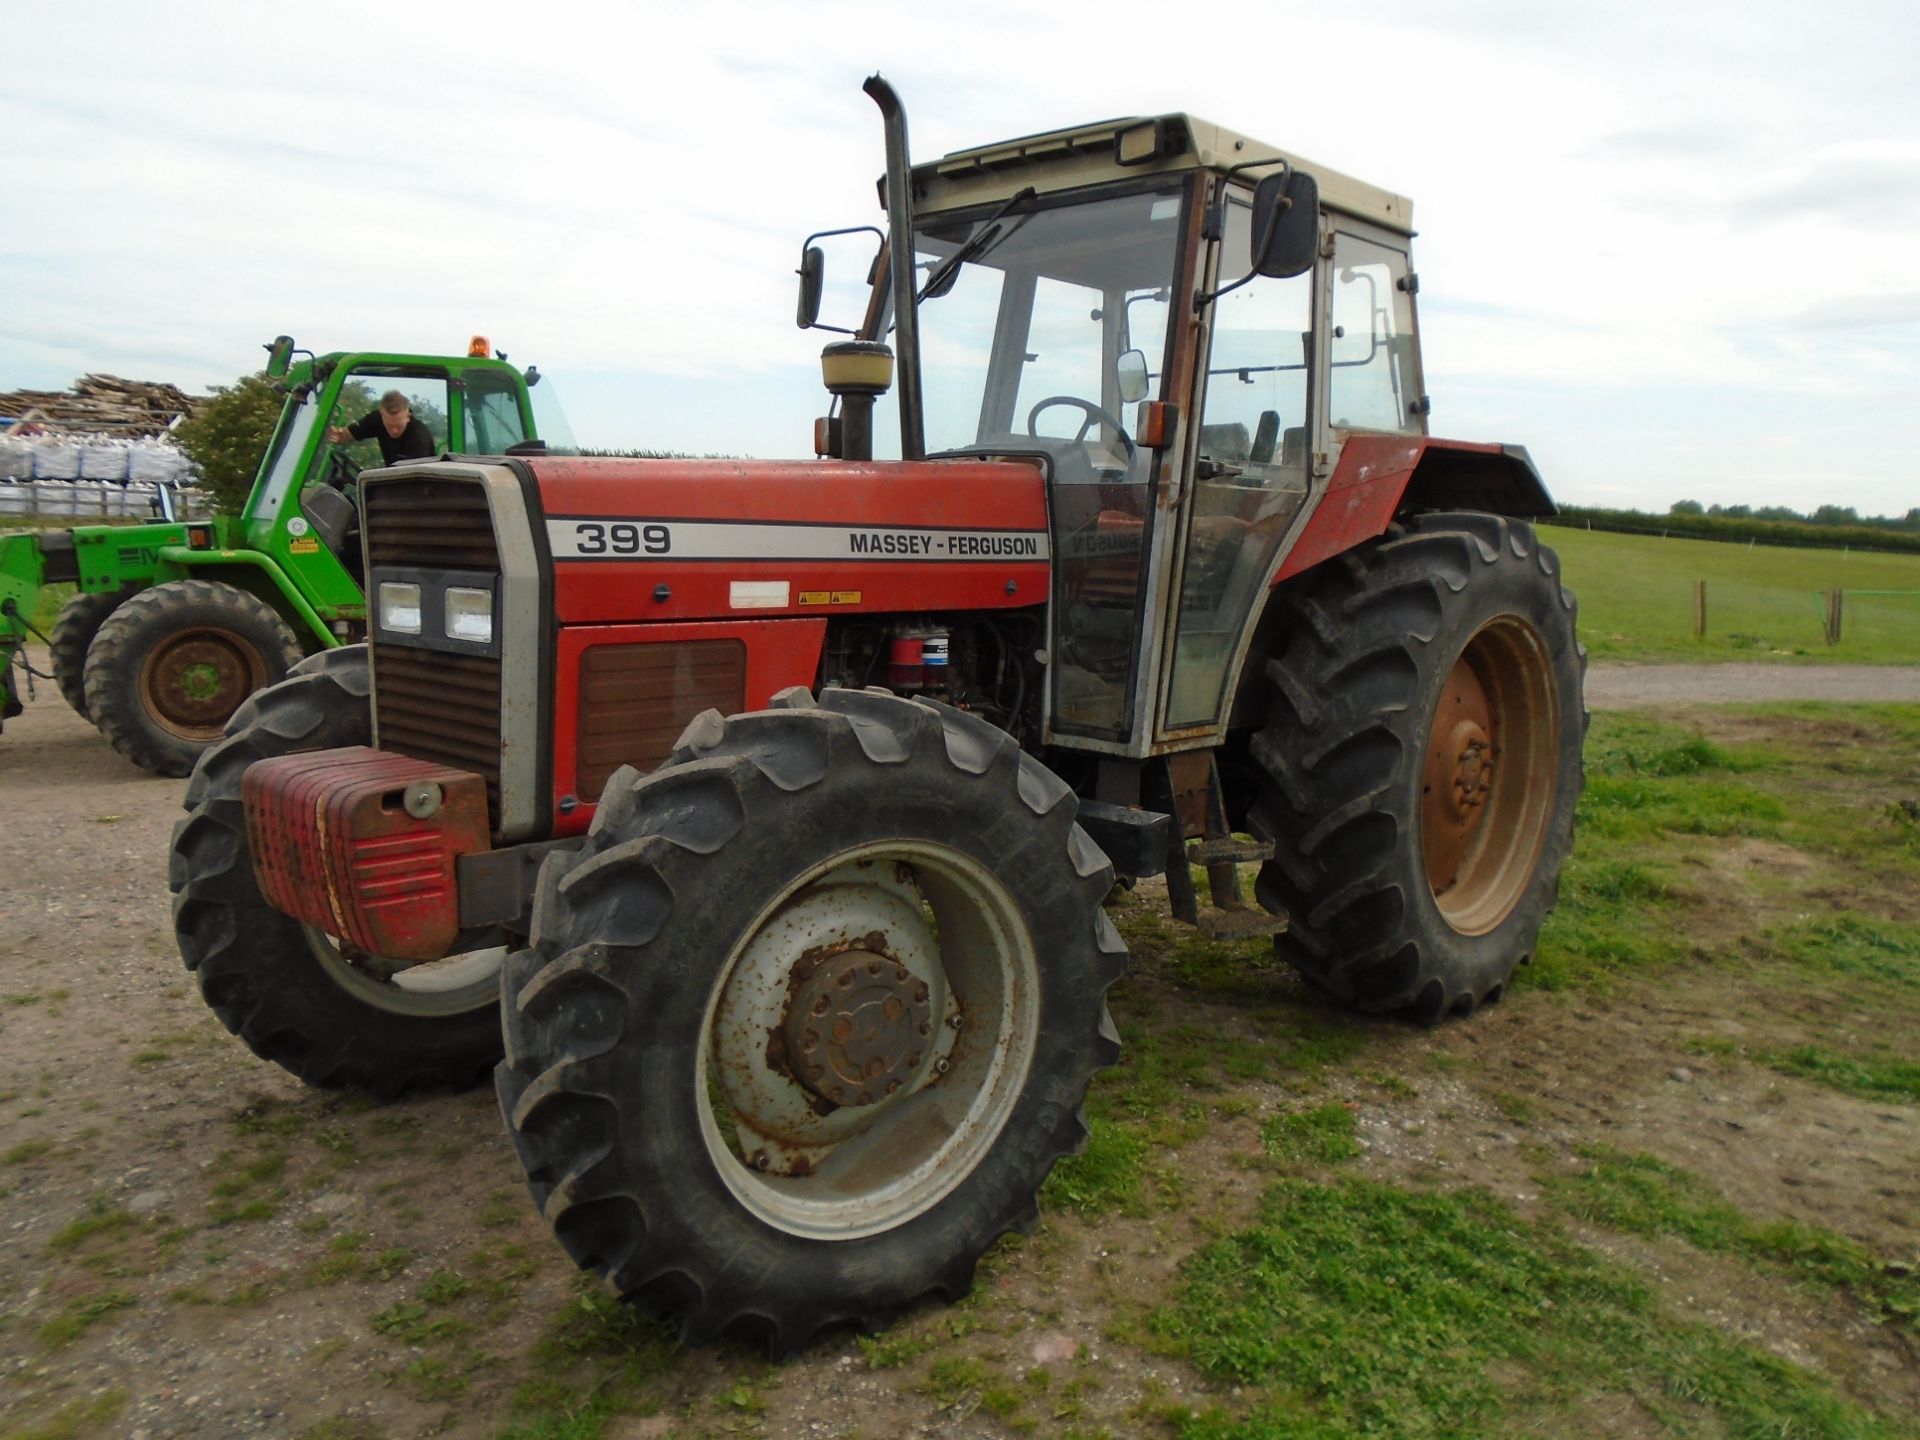 1990 Massey Ferguson 399 tractor, G499 SAT, 5,050 hours, 2 spools, 540/1000 PTO, 85% tyres (weights